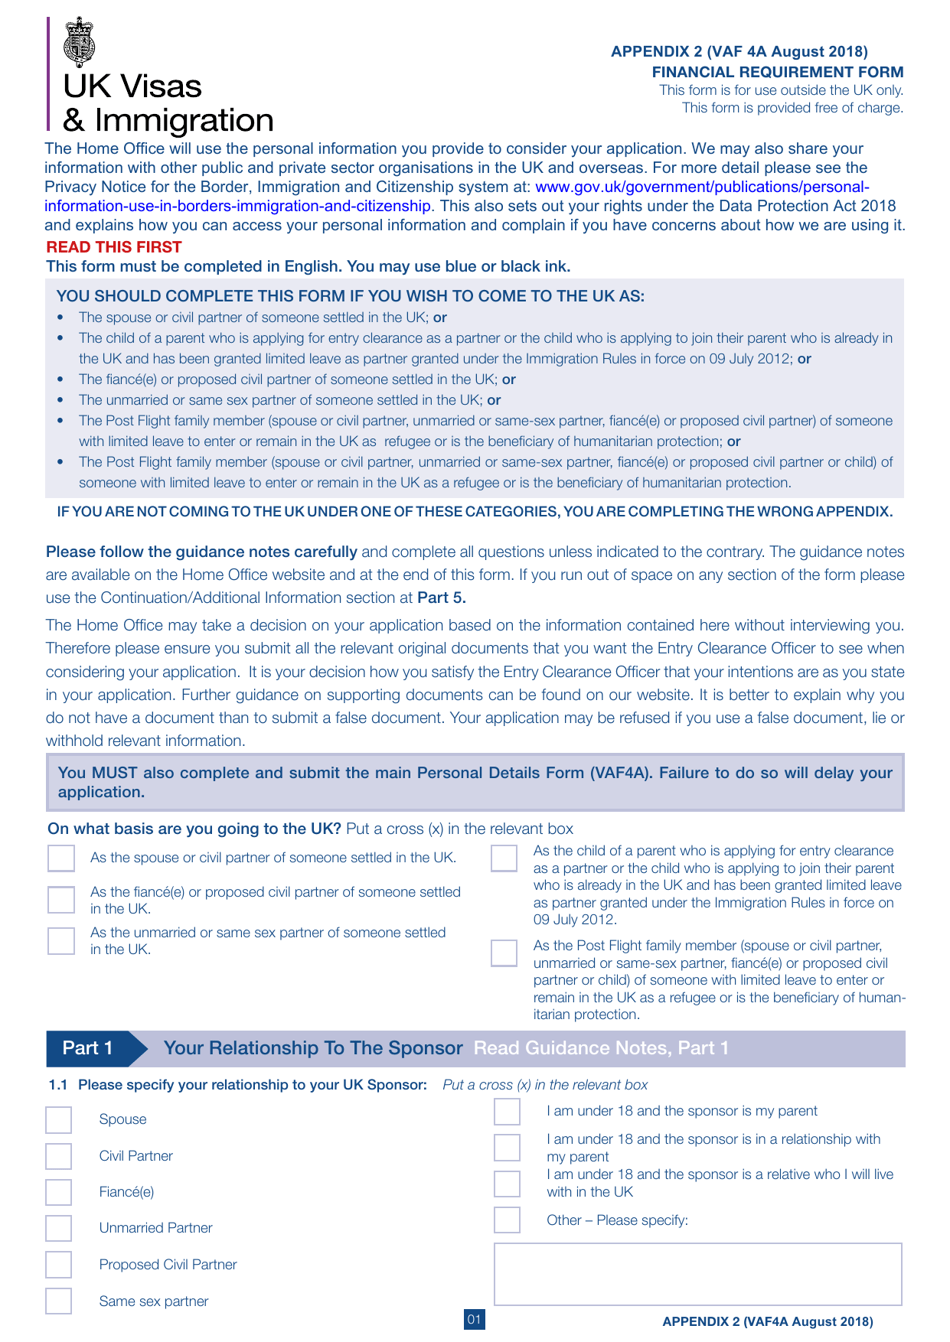 Form VAF4A Appendix 2 Financial Requirement Form - United Kingdom, Page 1